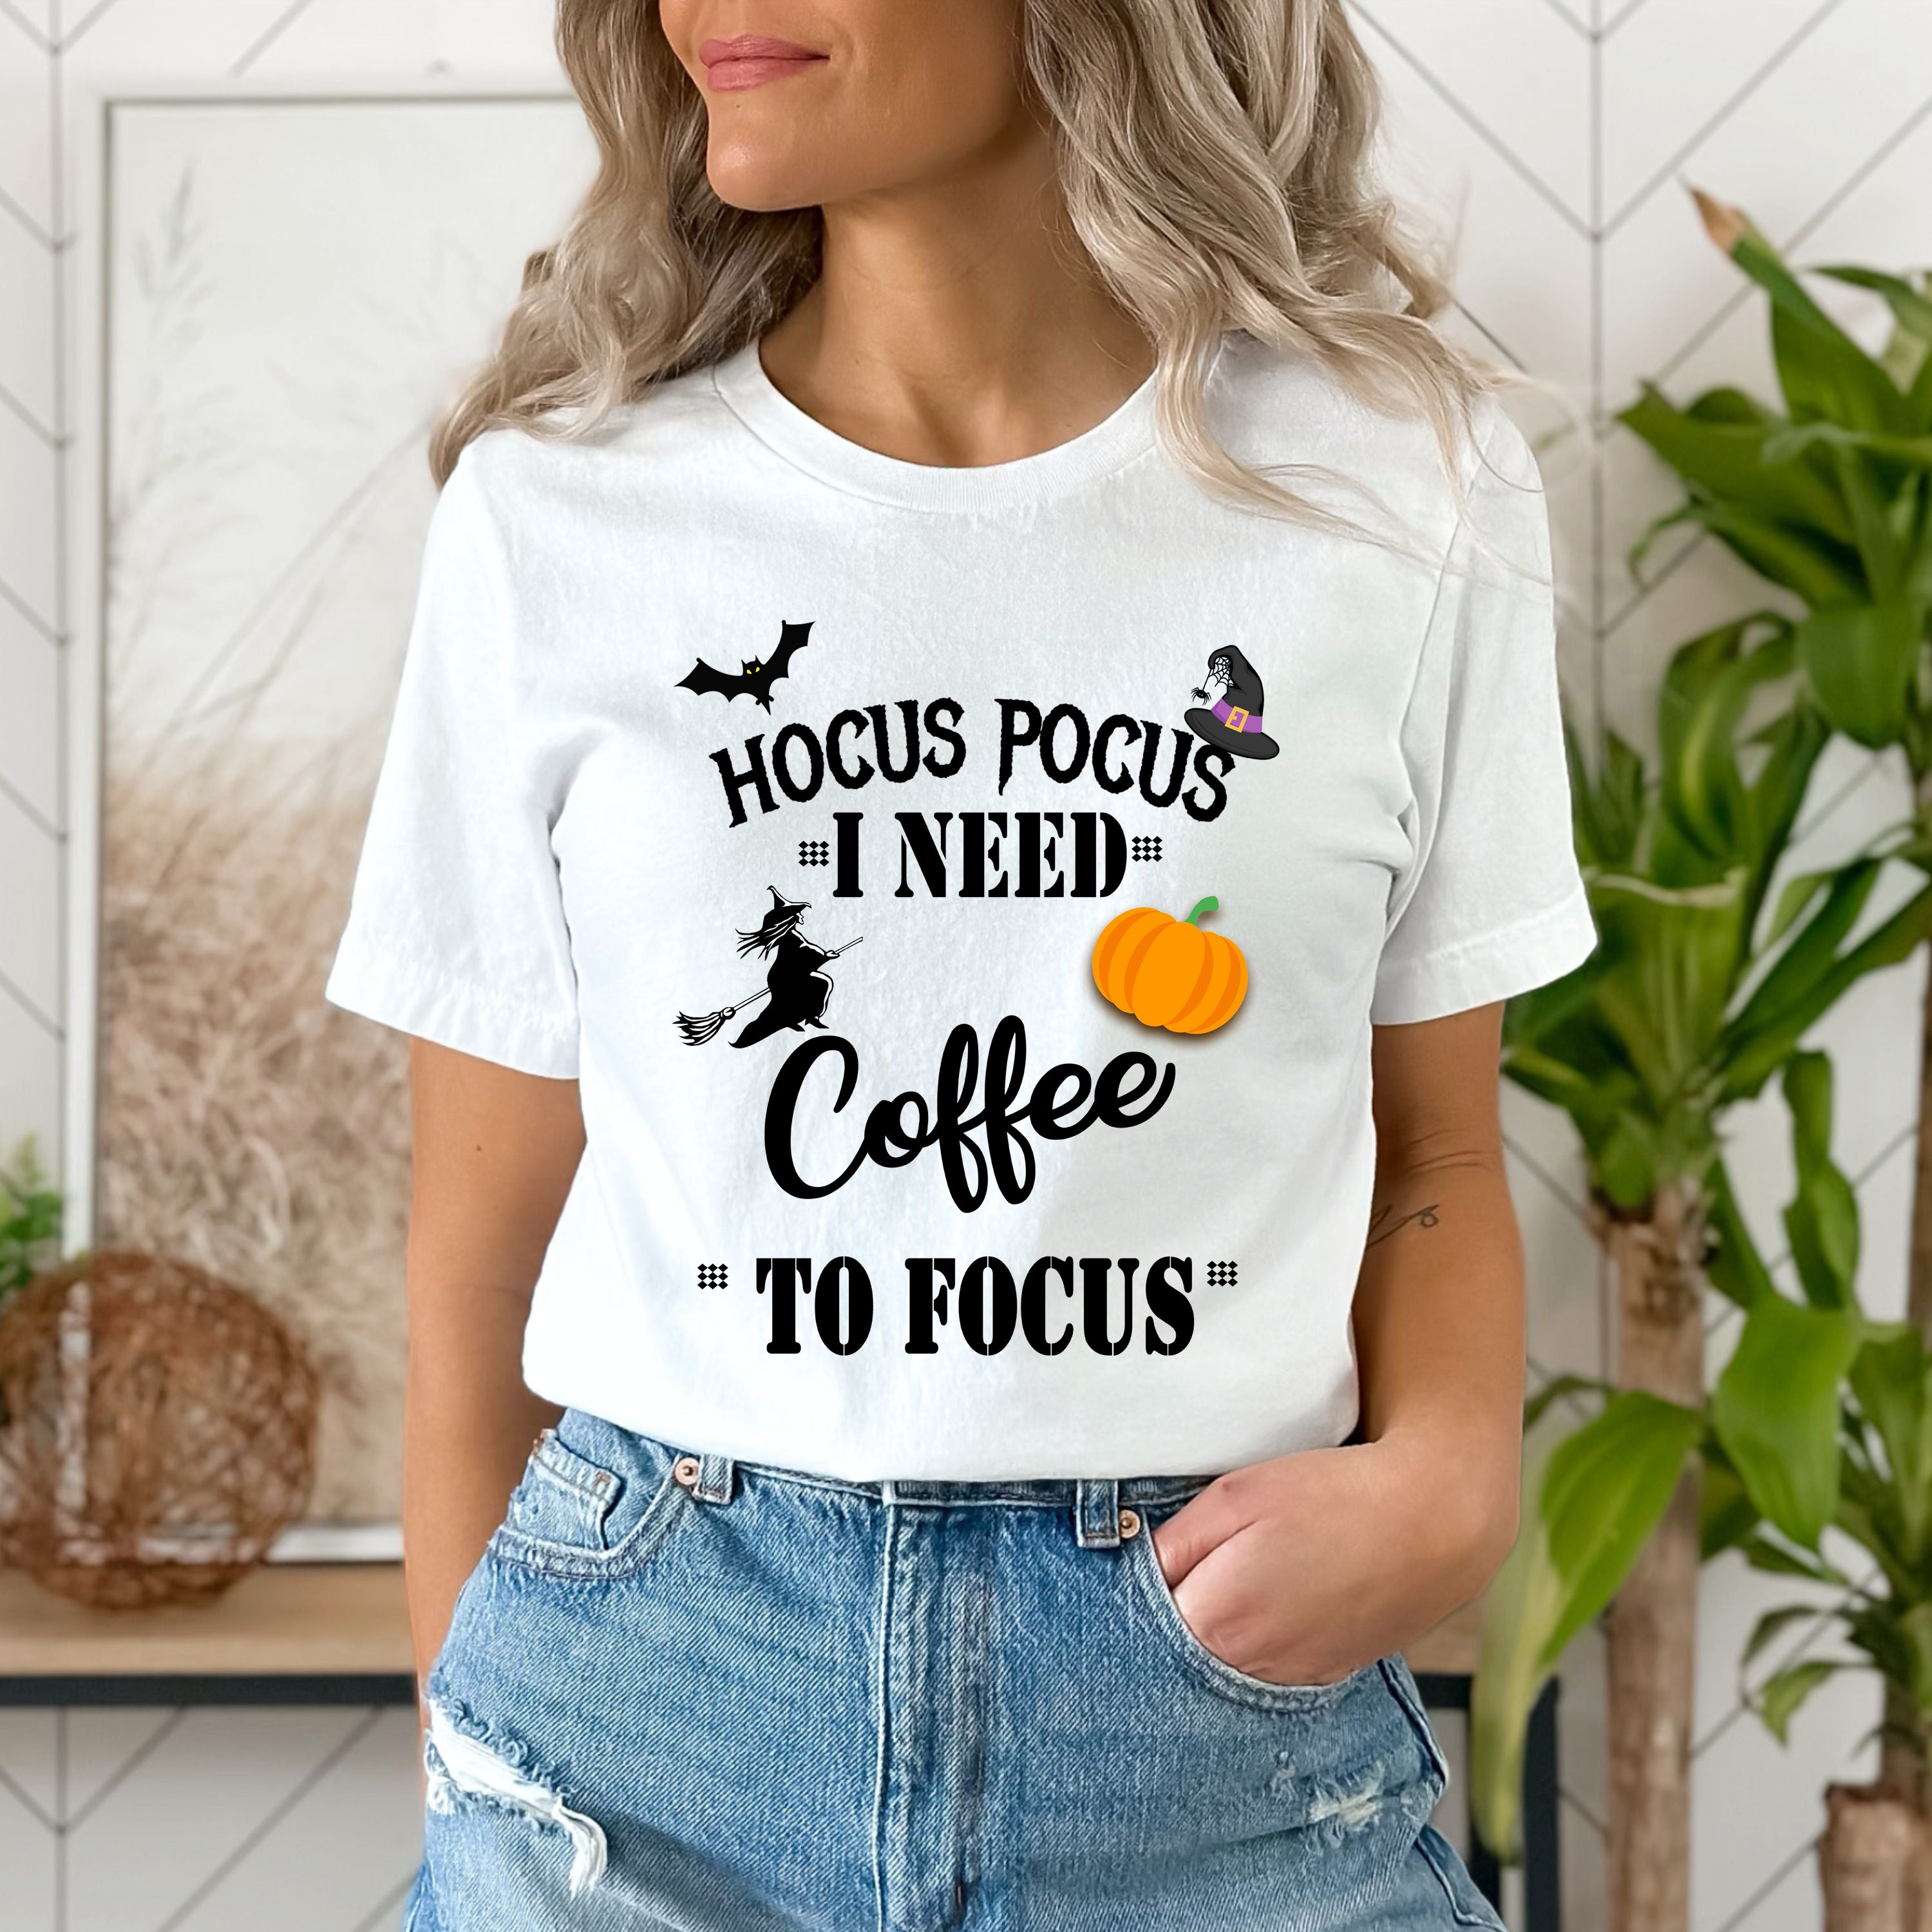 "HOCUS POCUS I NEED COFFEE TO FOCUS".